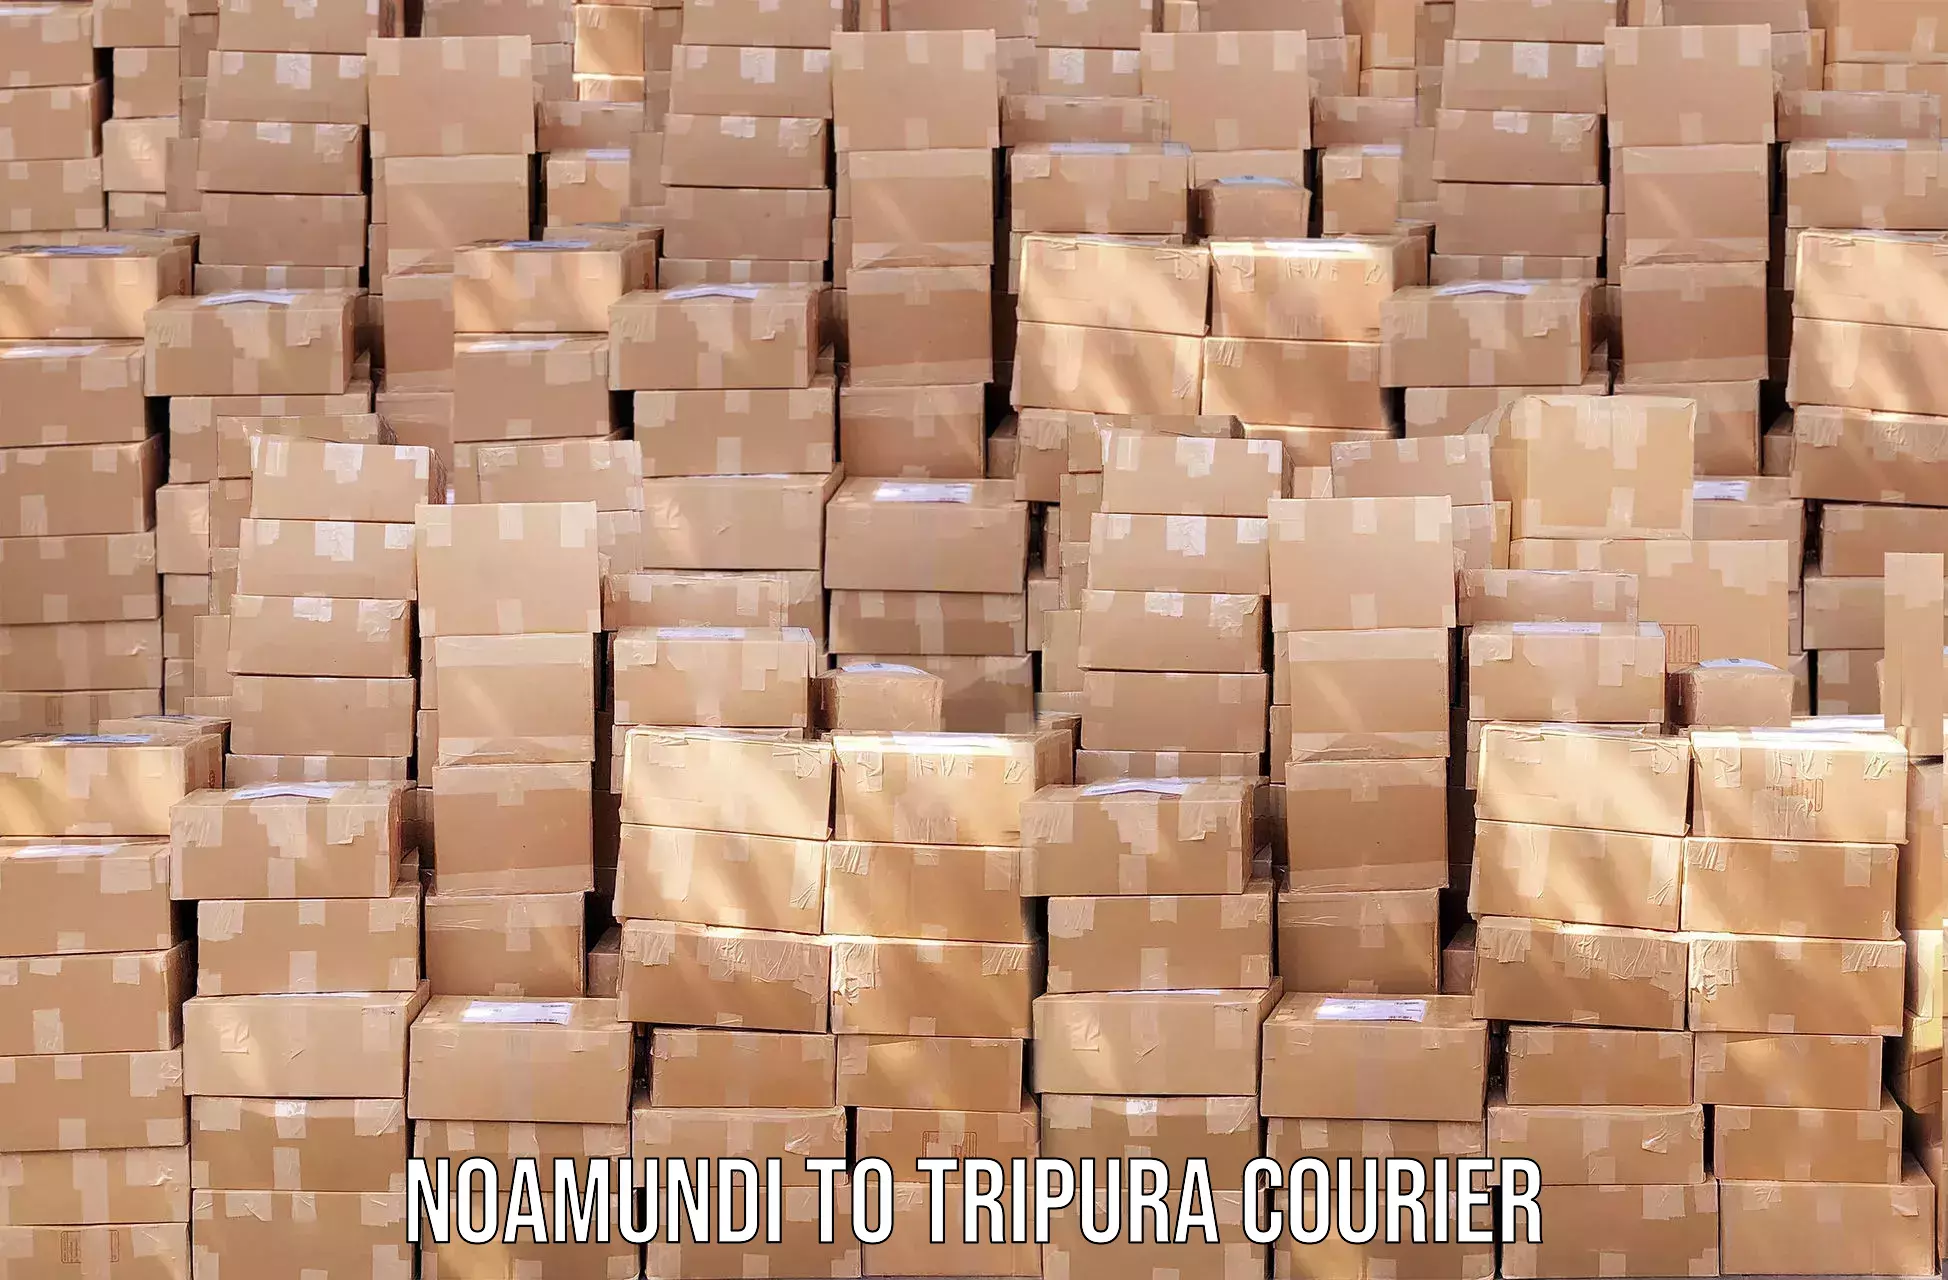 Scheduled delivery in Noamundi to Tripura